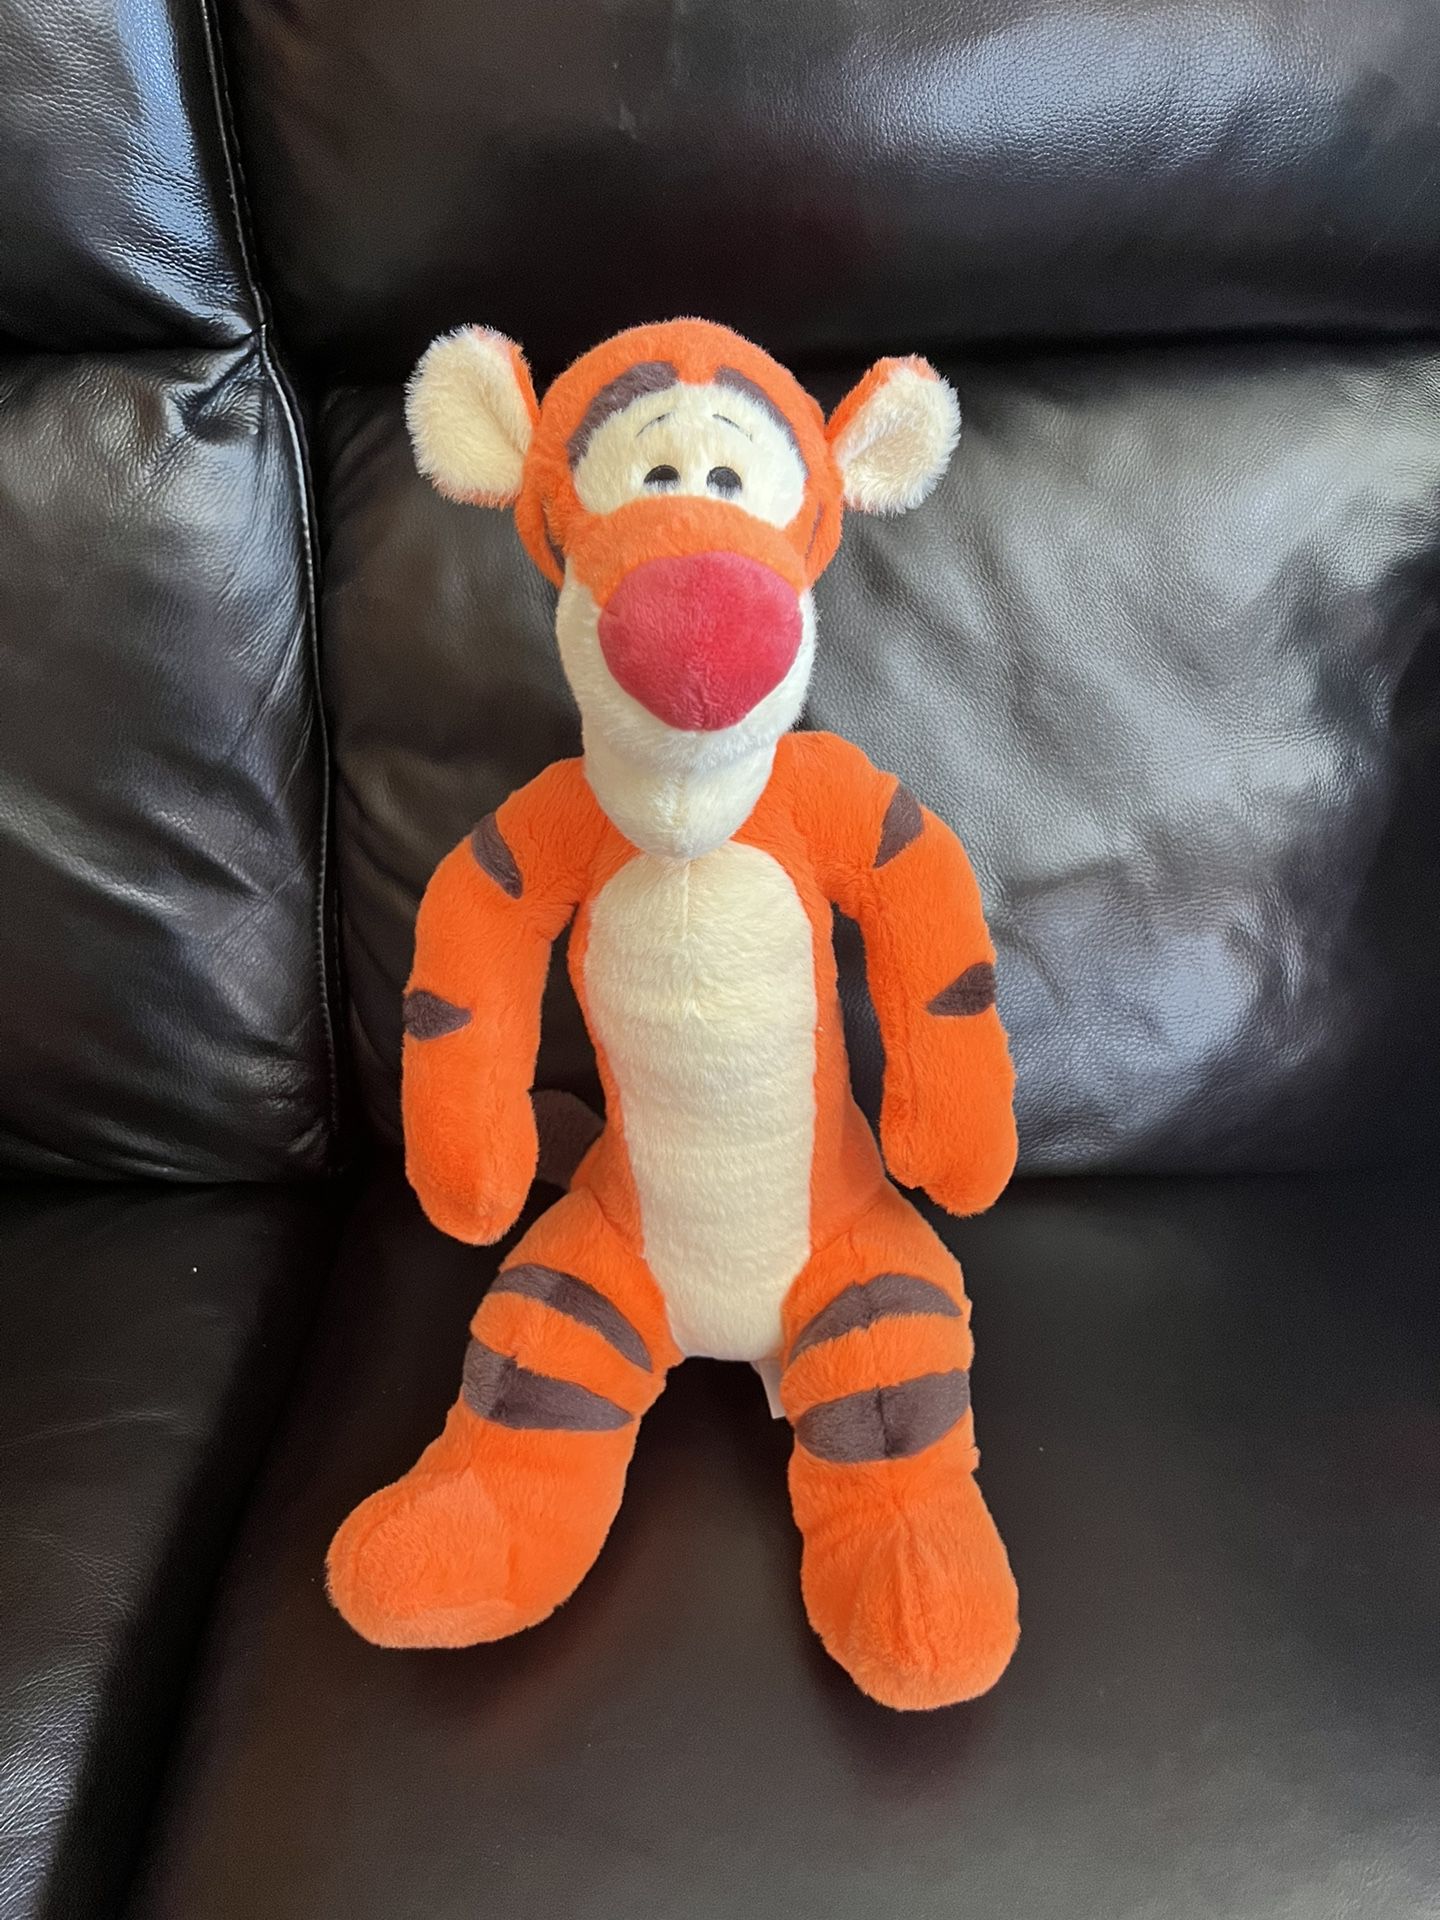 Disney Parks Exclusive Authentic 18” Tigger Plush Winnie The Pooh Stuffed Animal